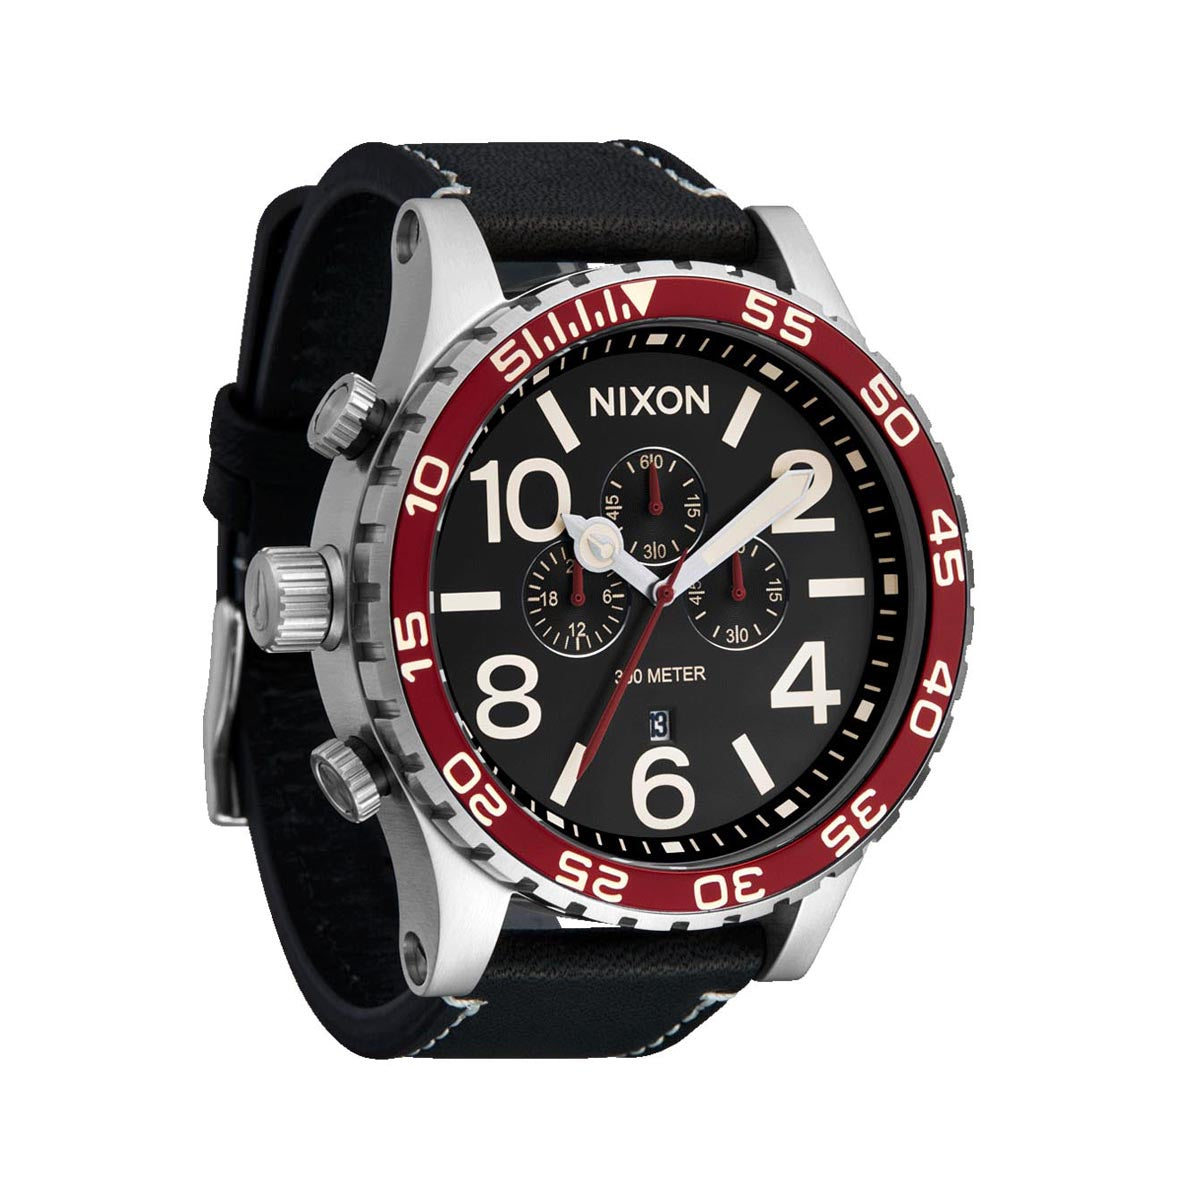 Nixon 51-30 Chrono Watch - Silver/Black/Cranberry image 2